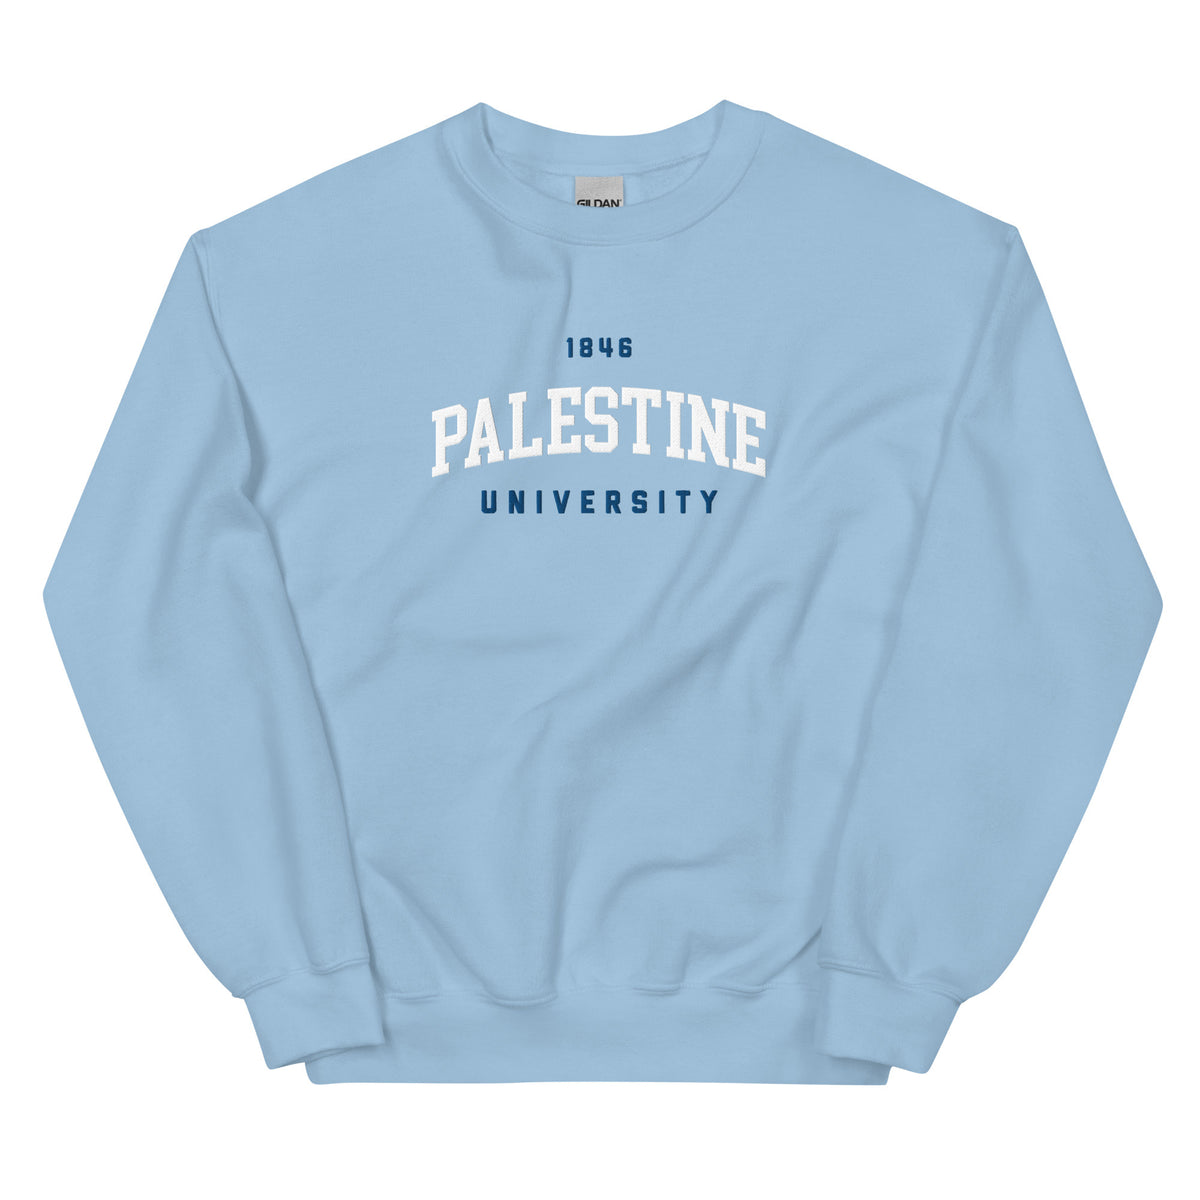 Palestine University 1846 sweatshirt in light blue by Dar Collective